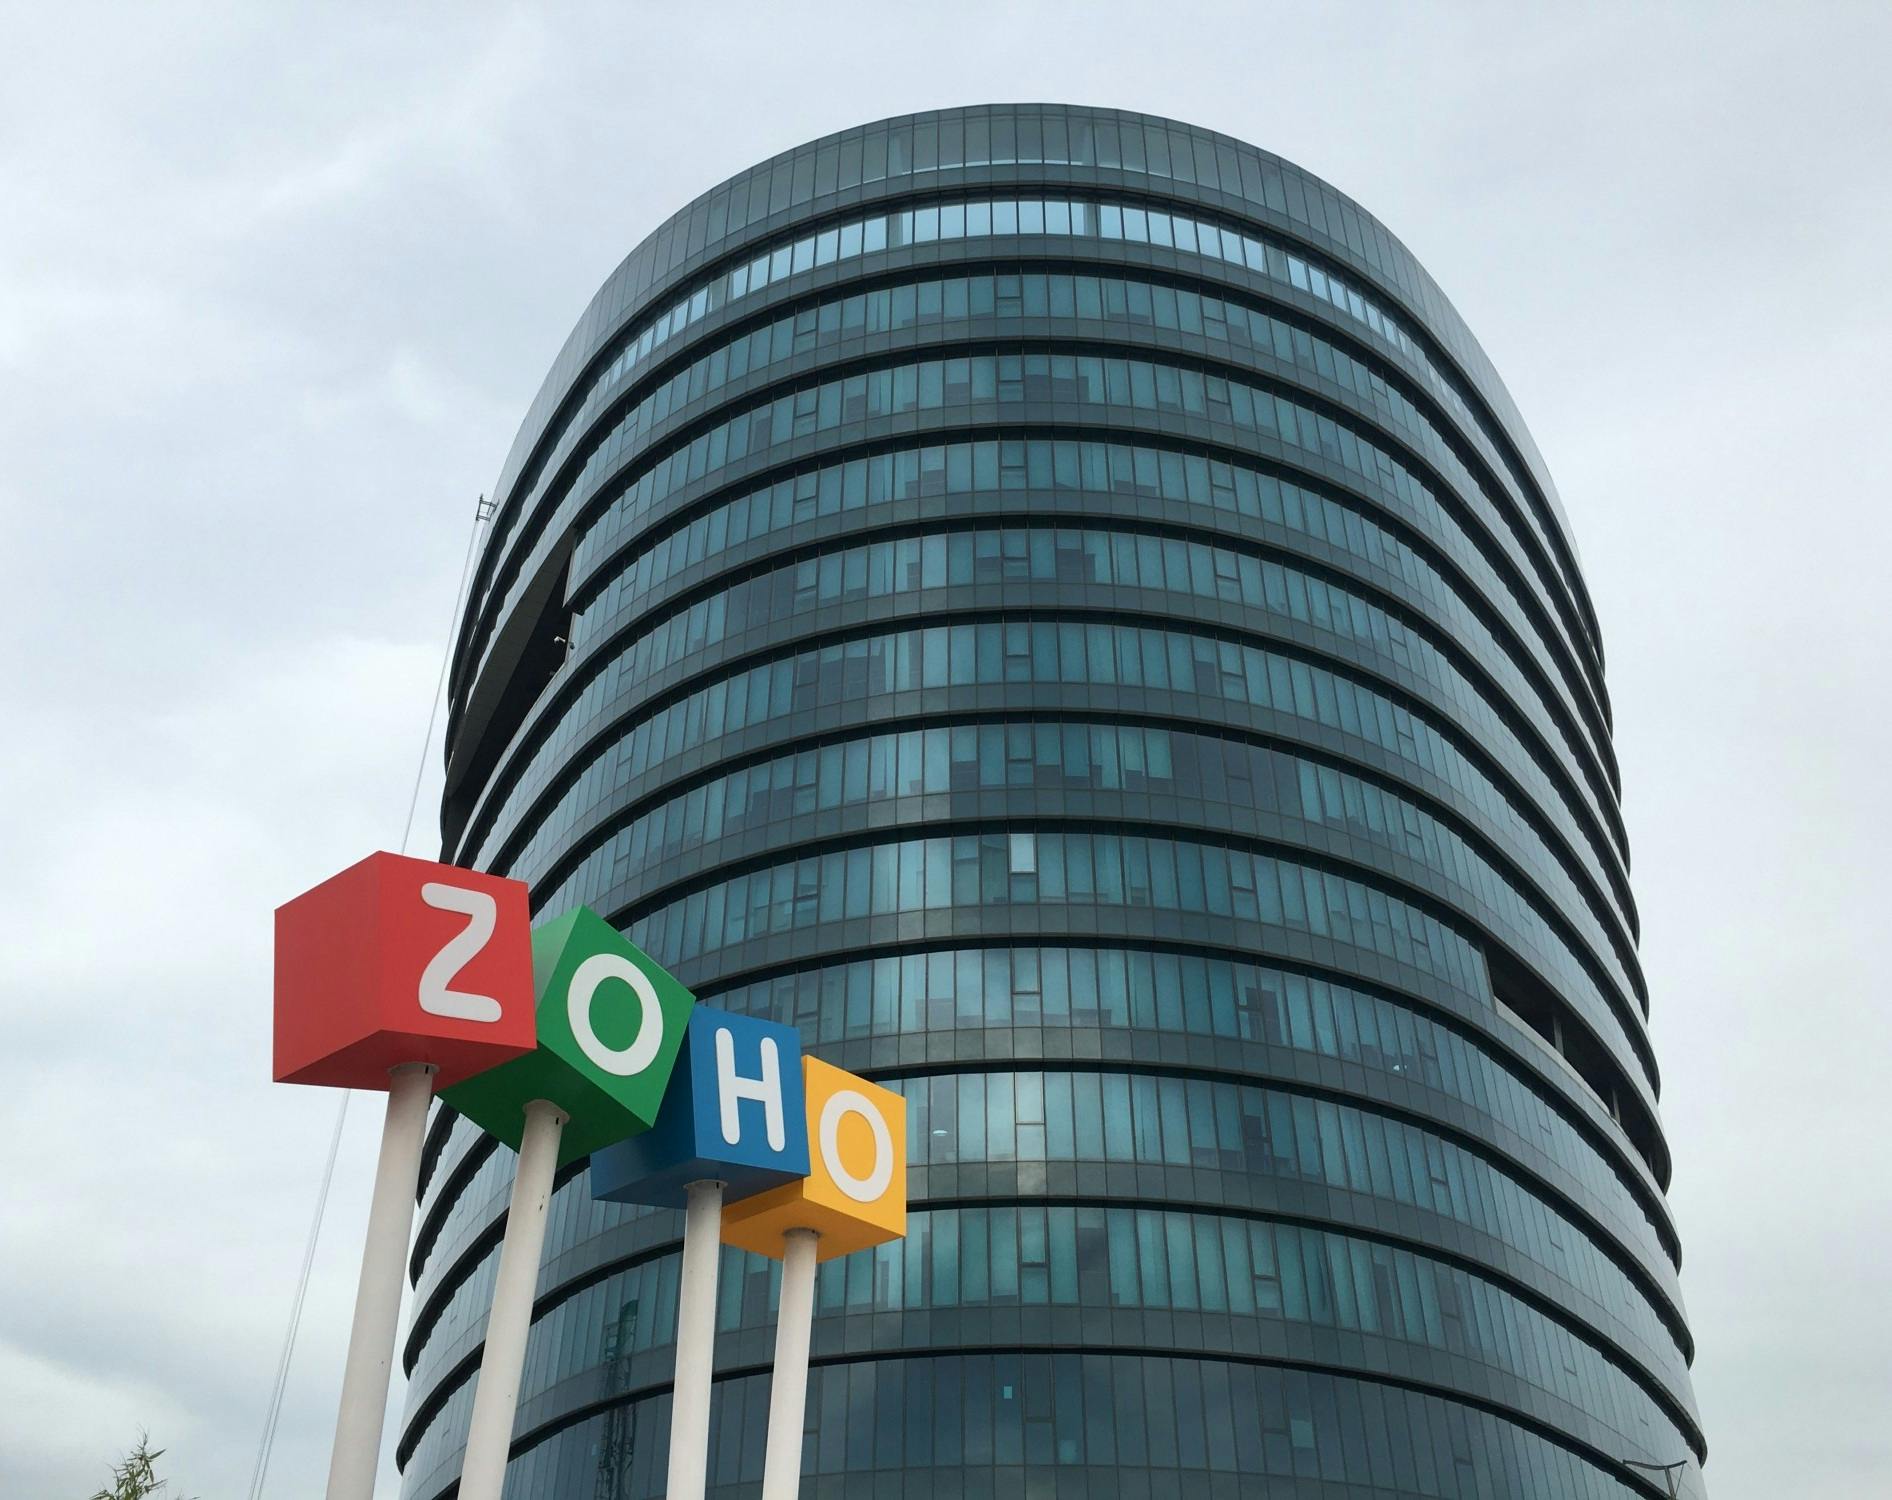 Zoho headquarters in chennai